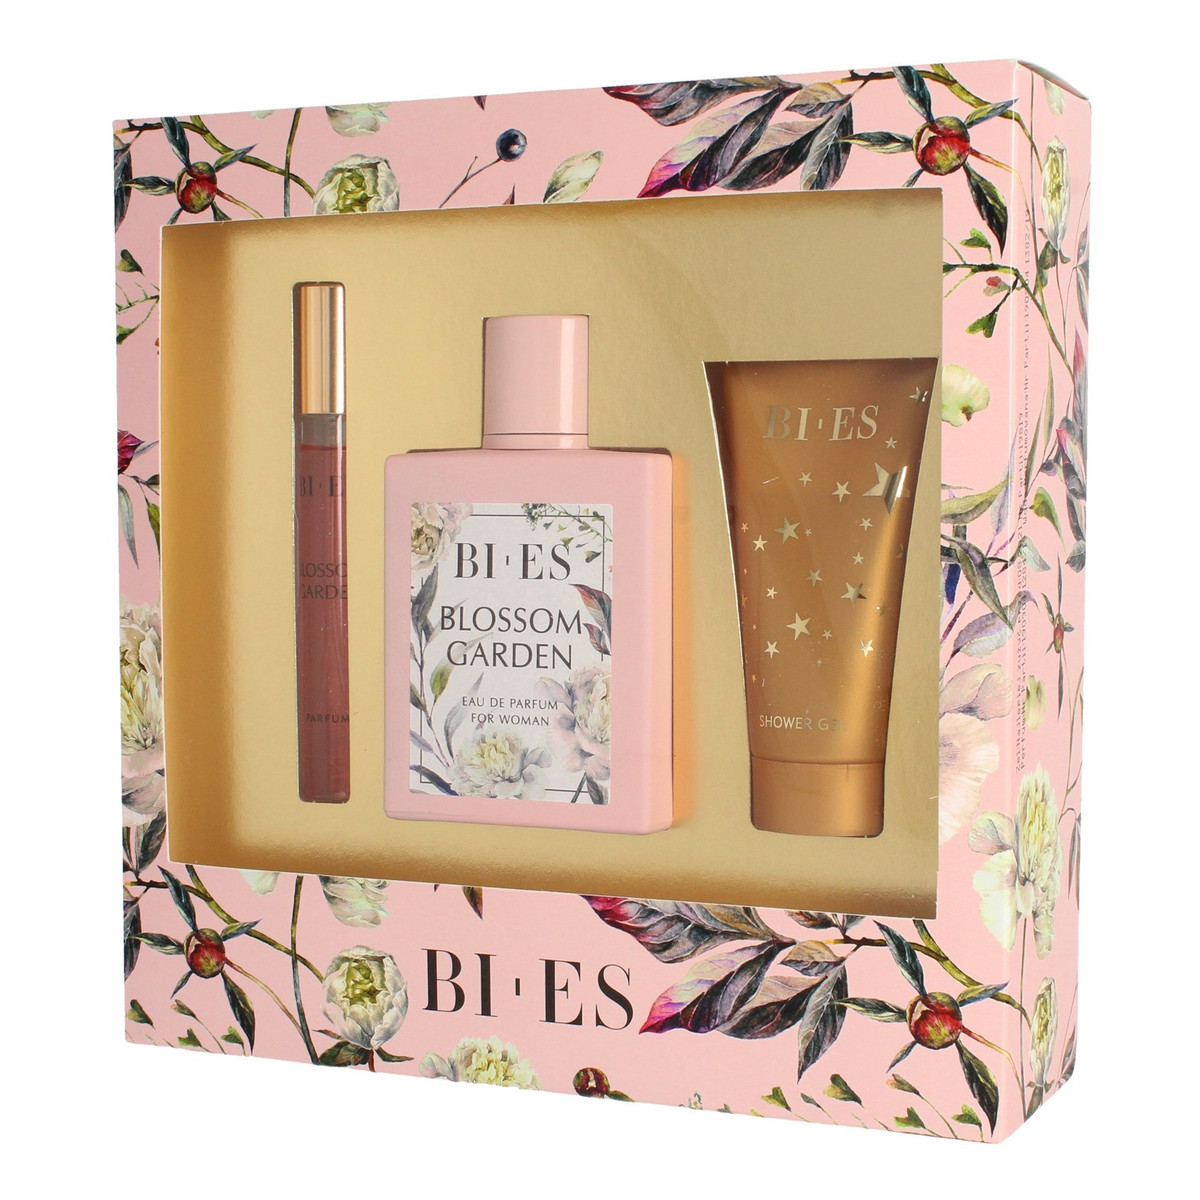 Bi-es Blossom Garden Komplet (woda perfumowana 100ml+parfum 12ml+żel pod prysznic 50ml) 162ml